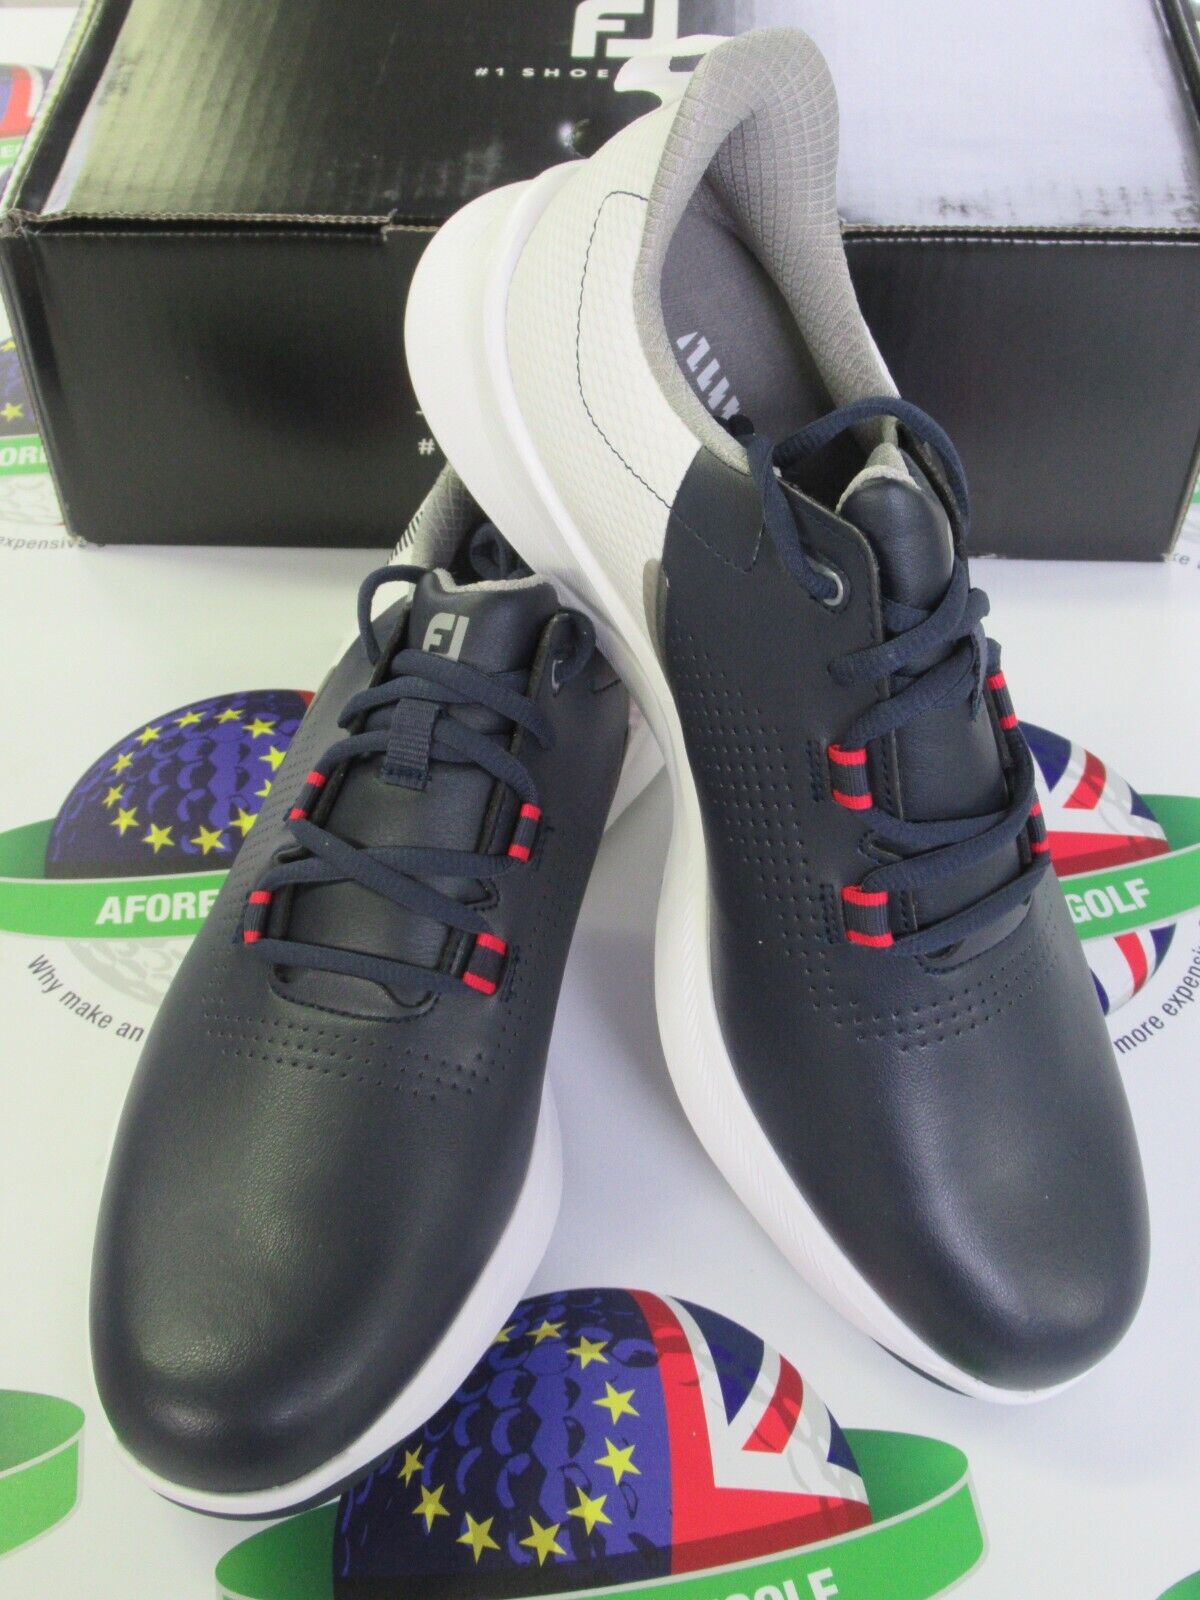 footjoy fj fuel waterproof golf shoes 55442k navy/white uk size 7.5 medium